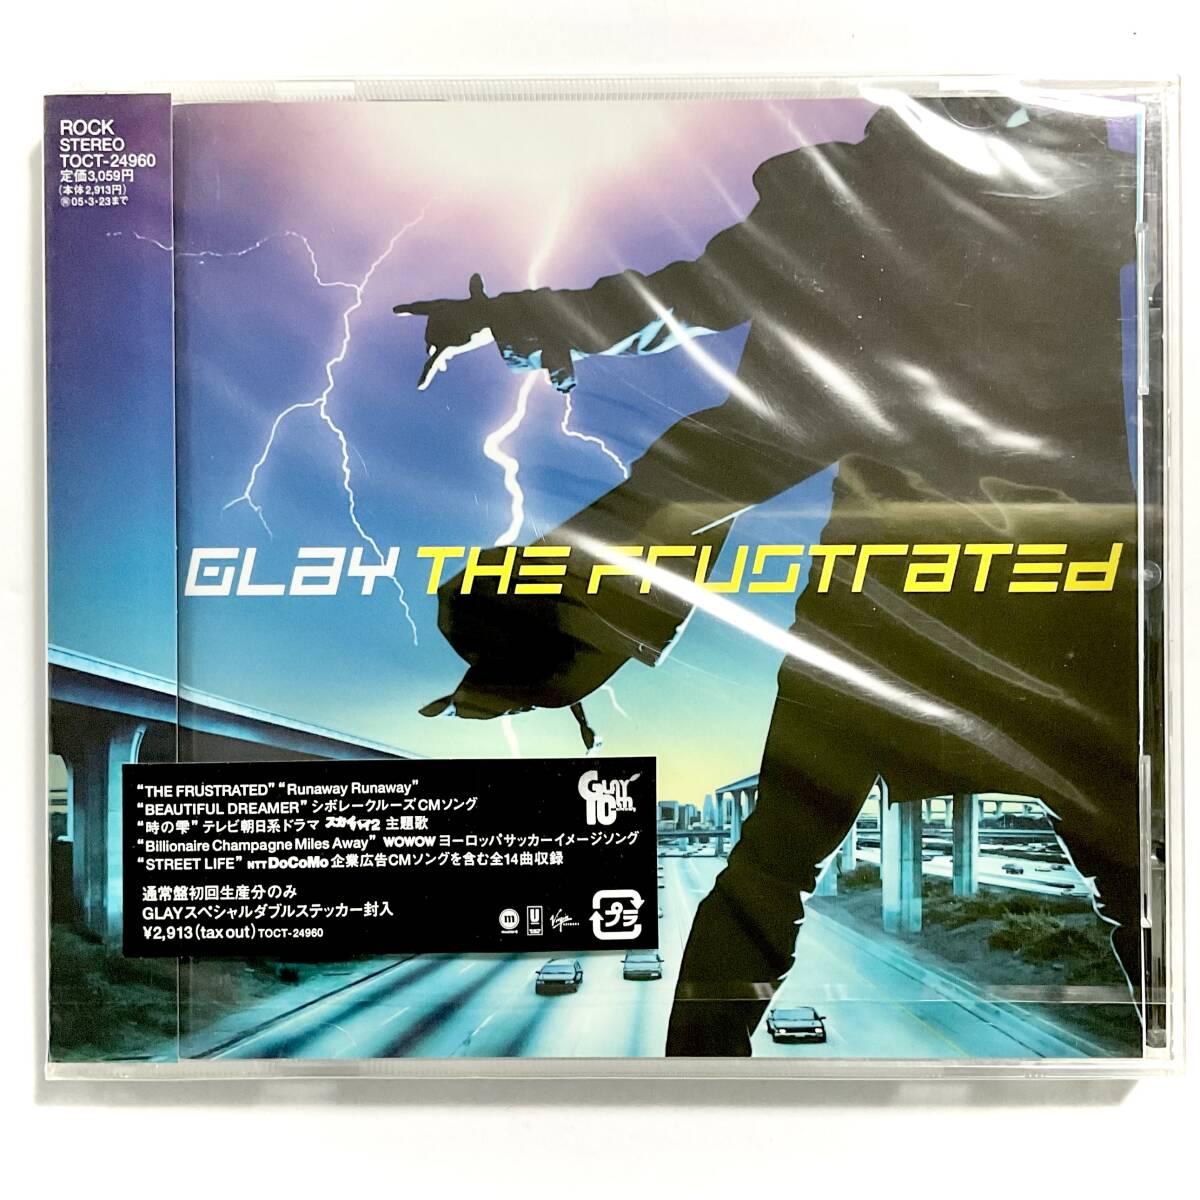  нераспечатанный GLAY THE FRUSTRATED CD SK17